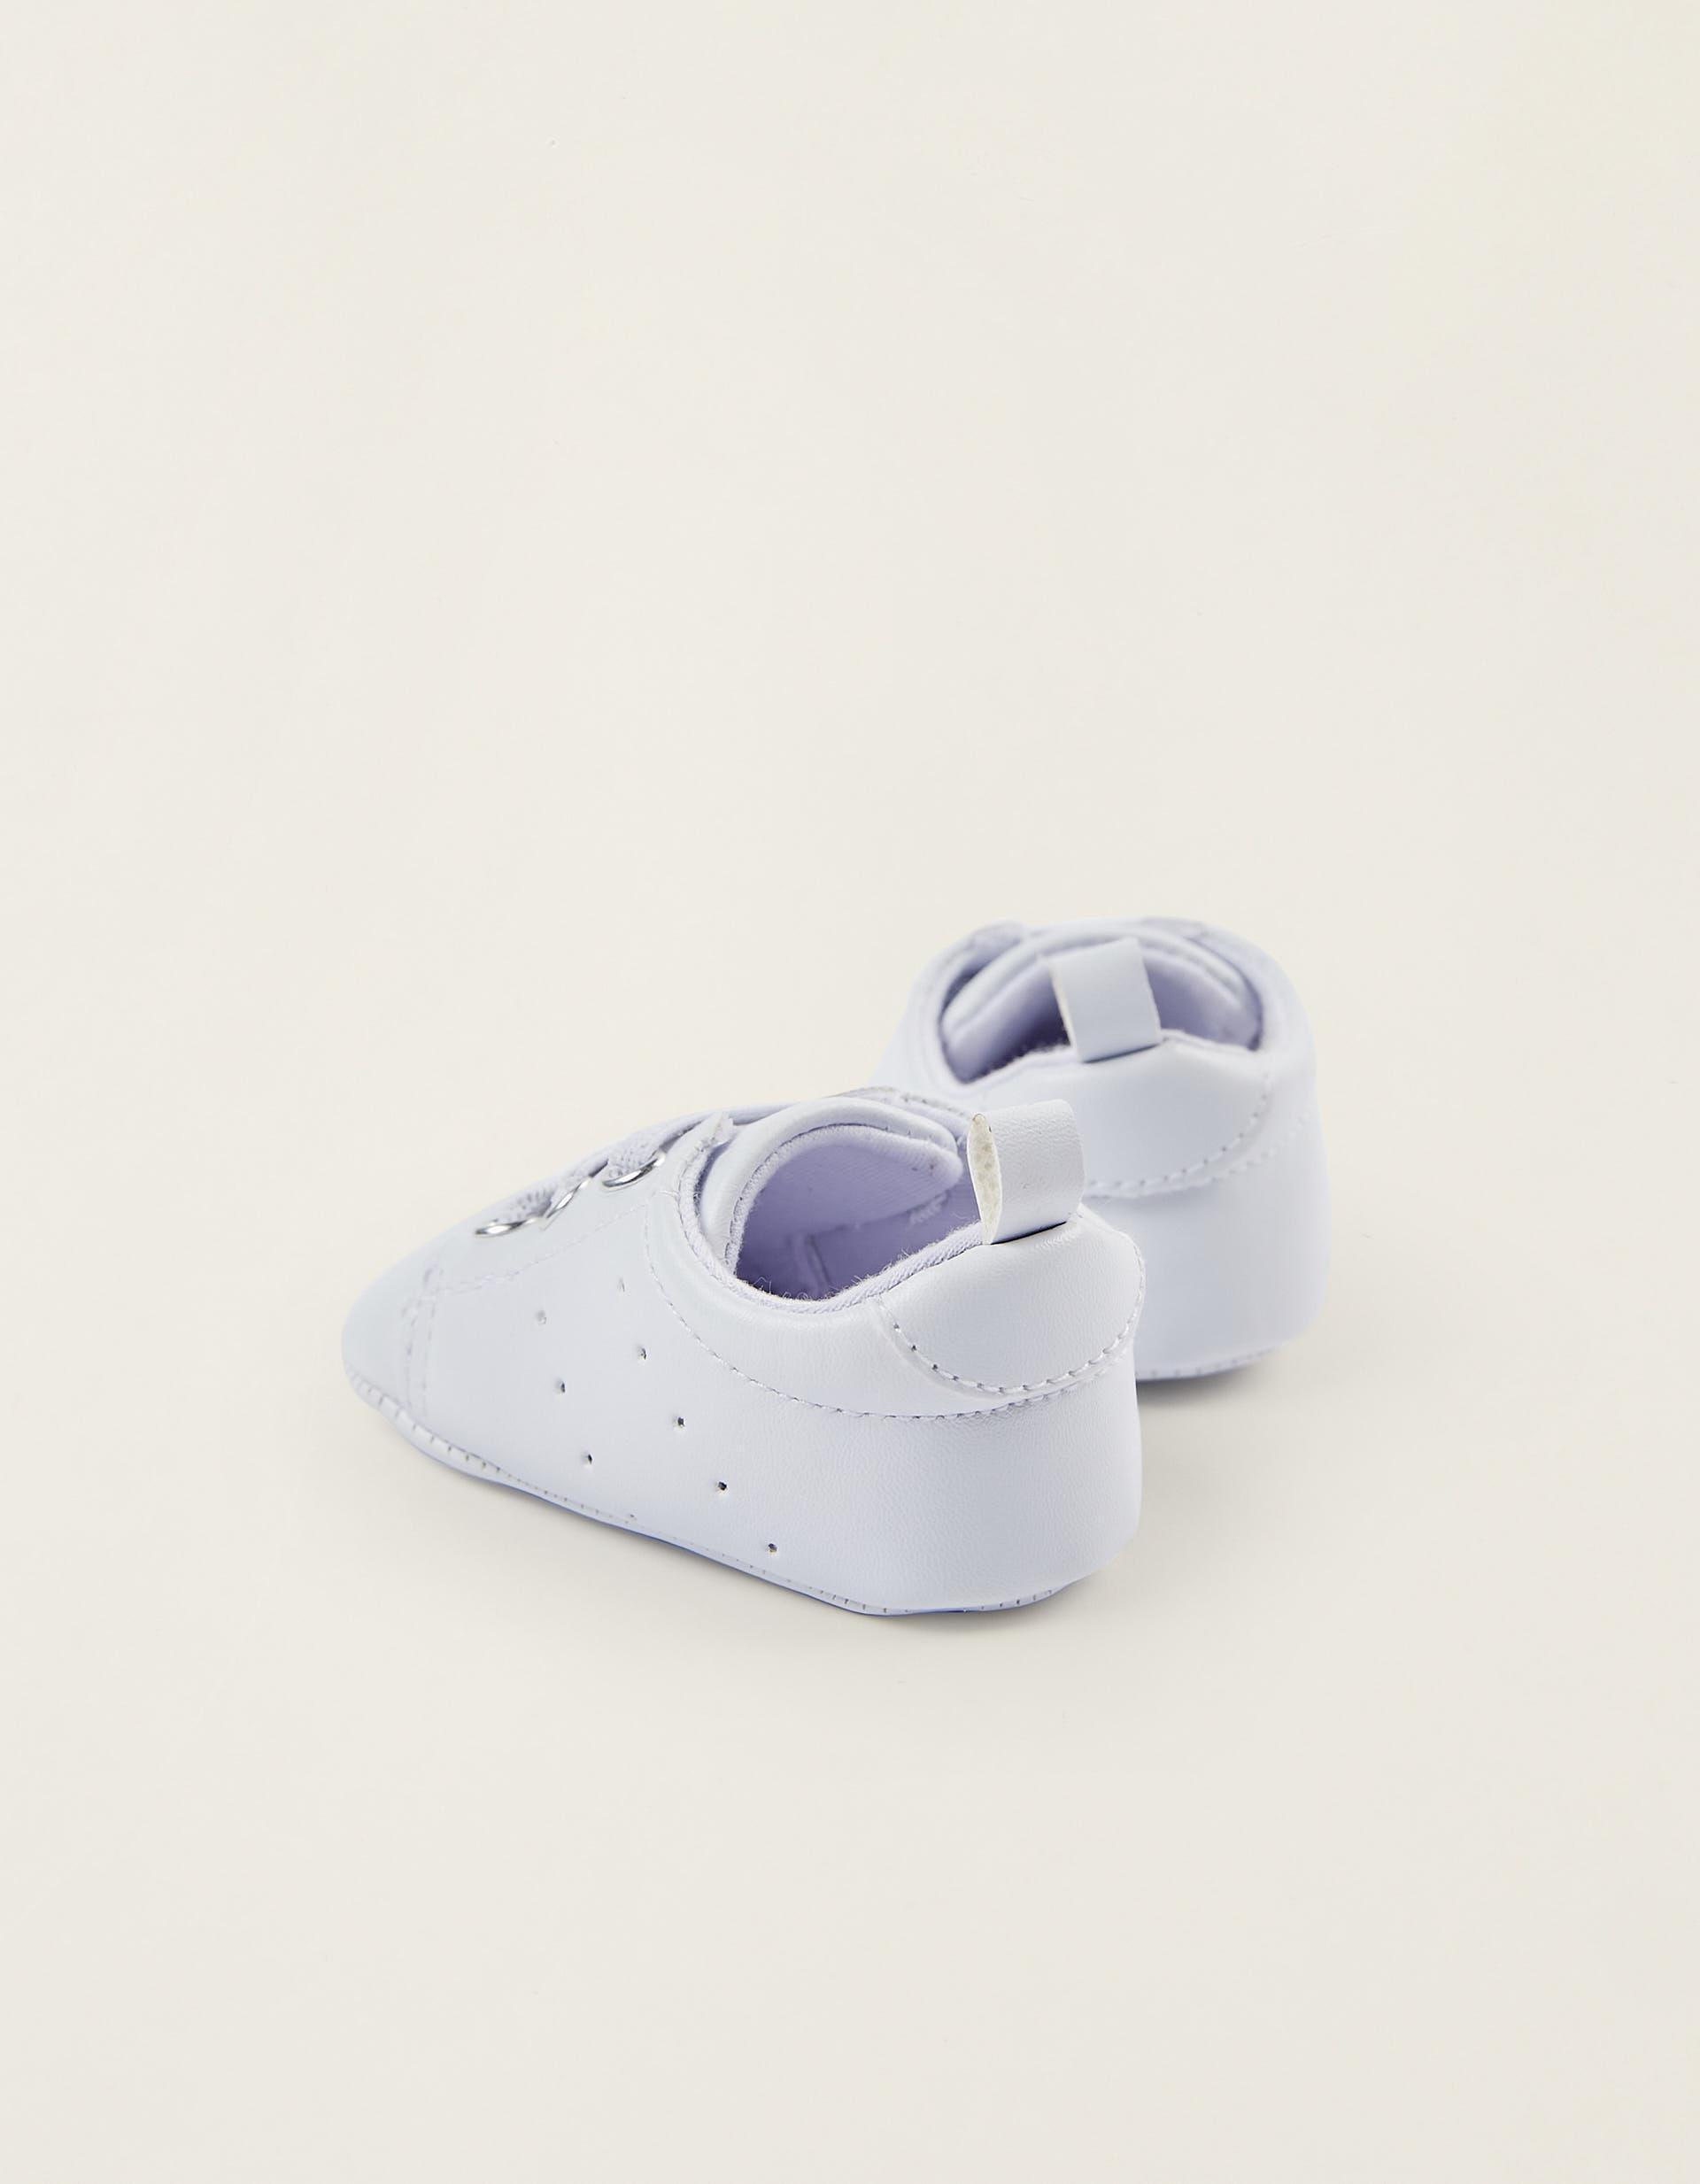 Zippy - White Detailed Shoes, Baby Boys